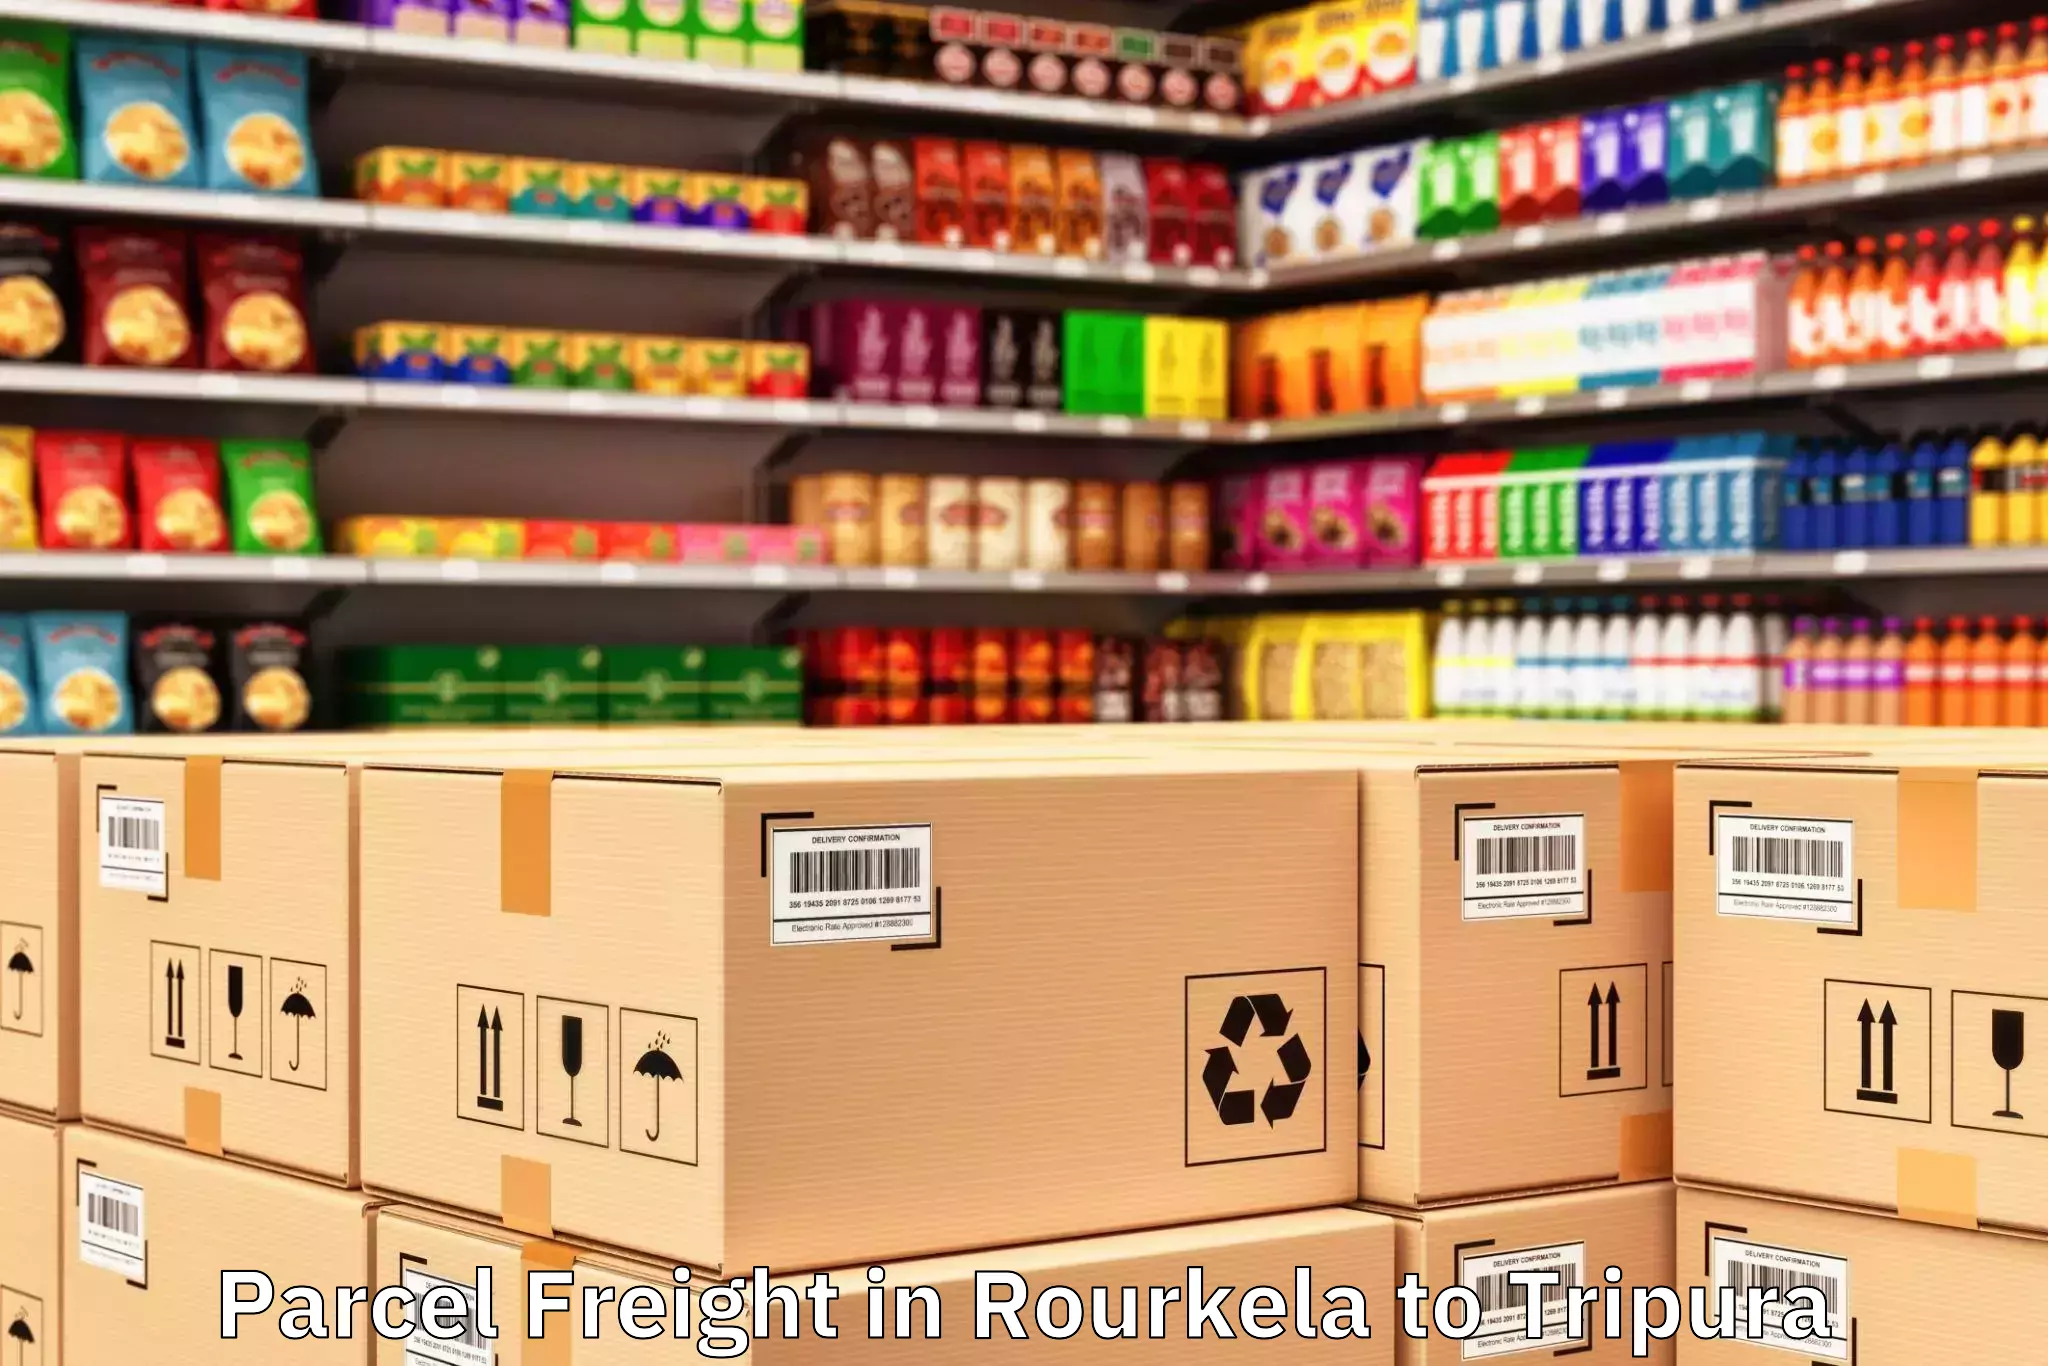 Efficient Rourkela to Udaipur Tripura Parcel Freight